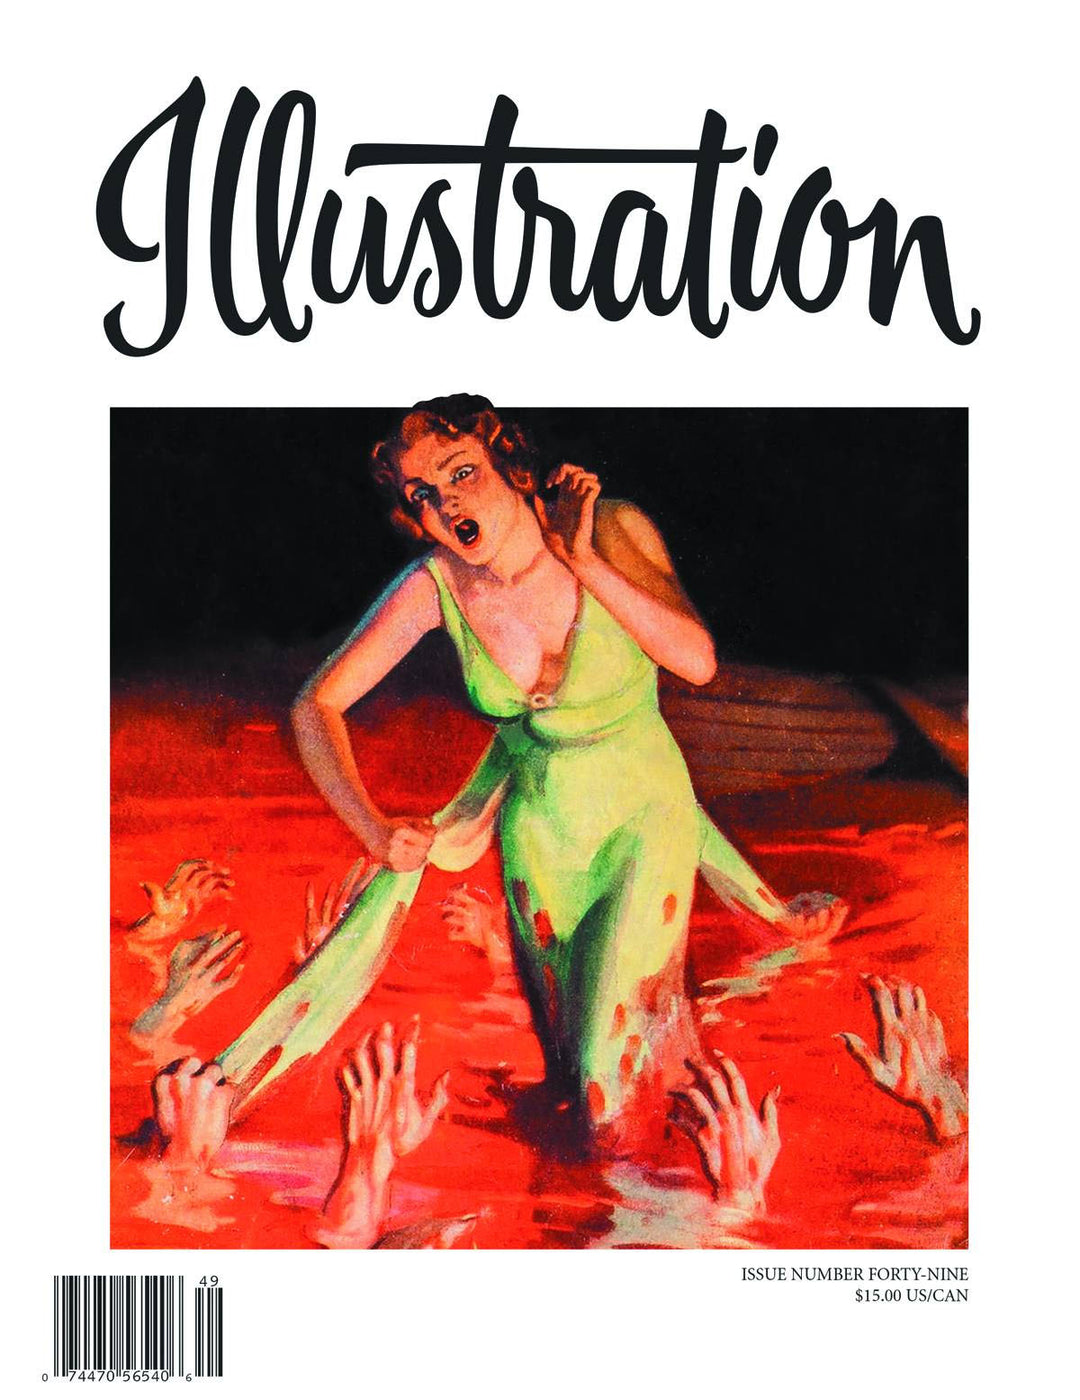 Illustration Magazine #49